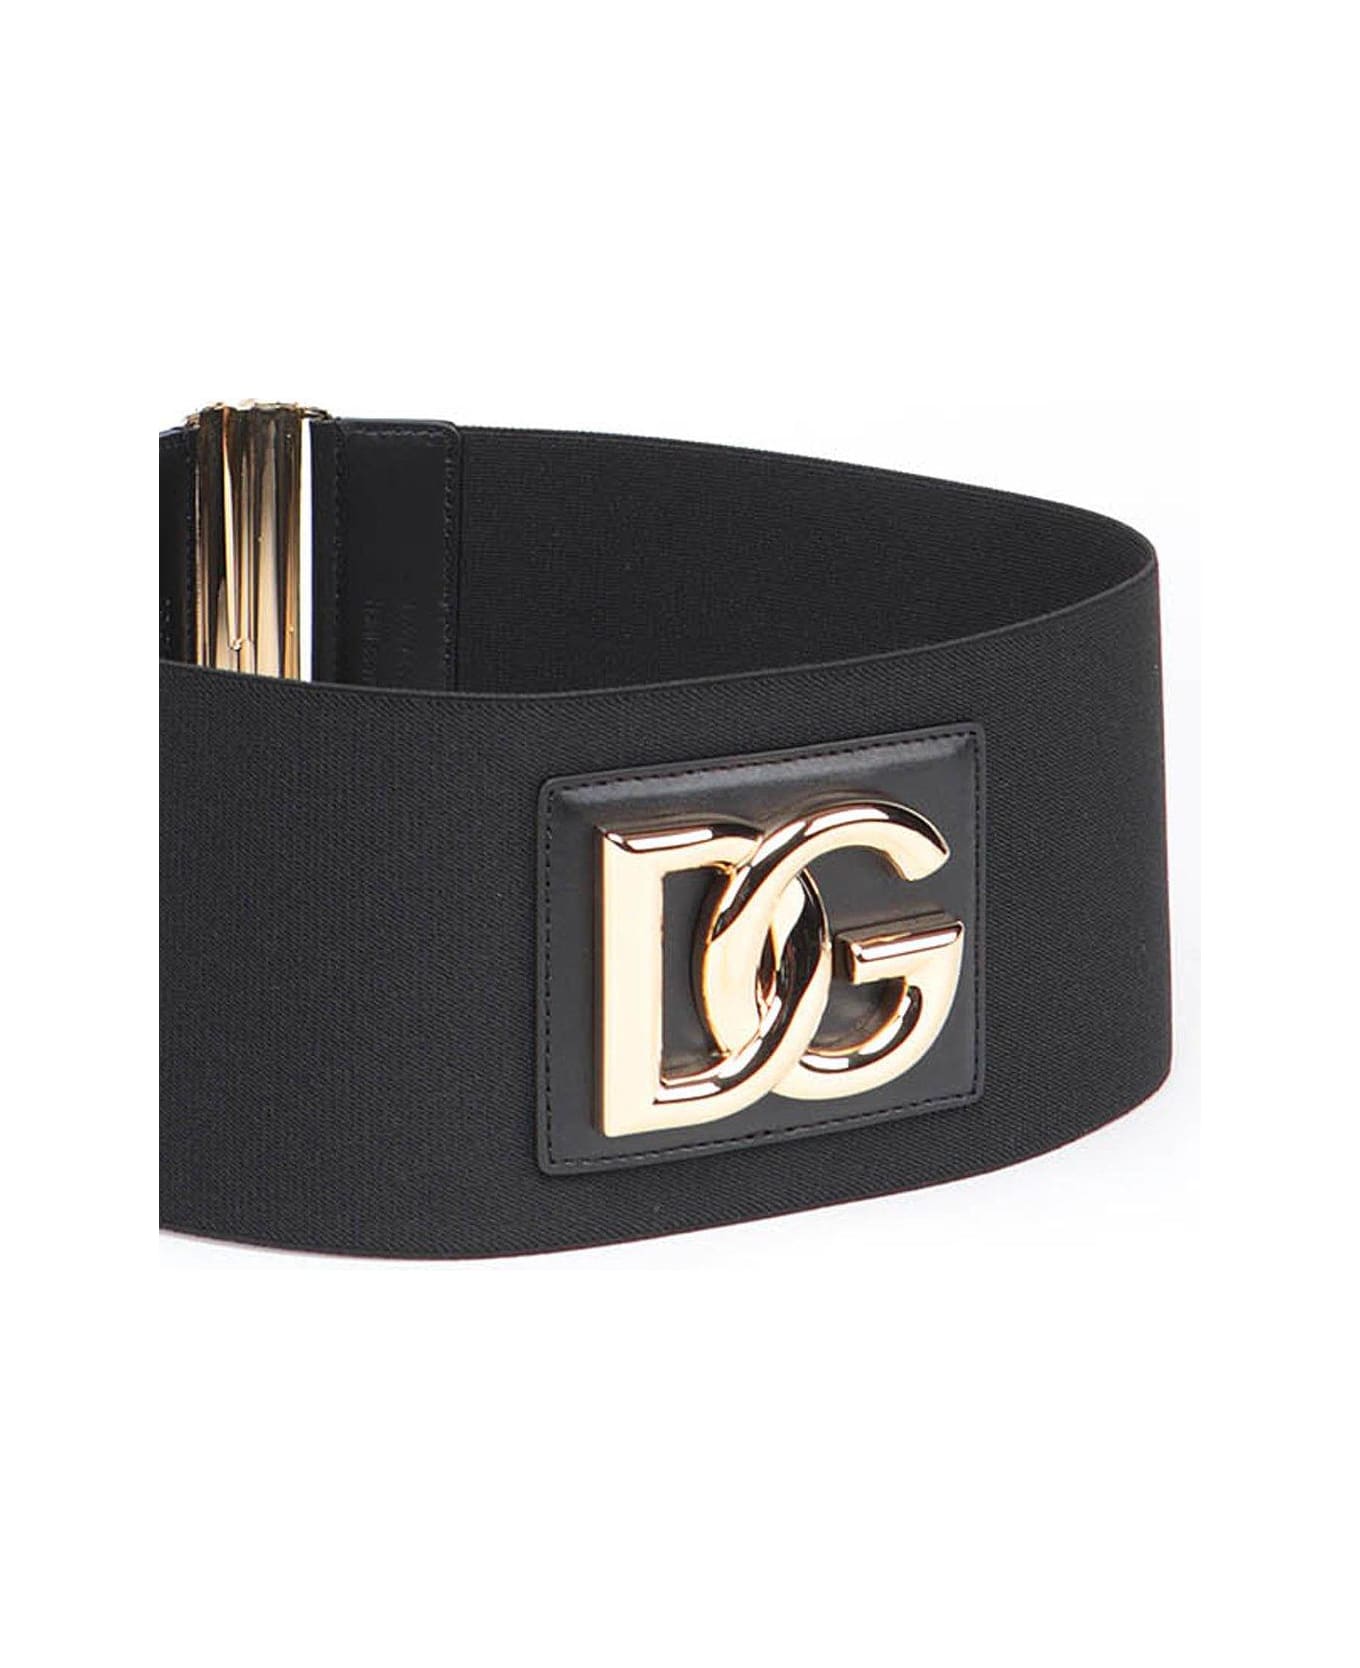 Dolce & Gabbana Dg Stretch Band Belt - Nero/nero ベルト